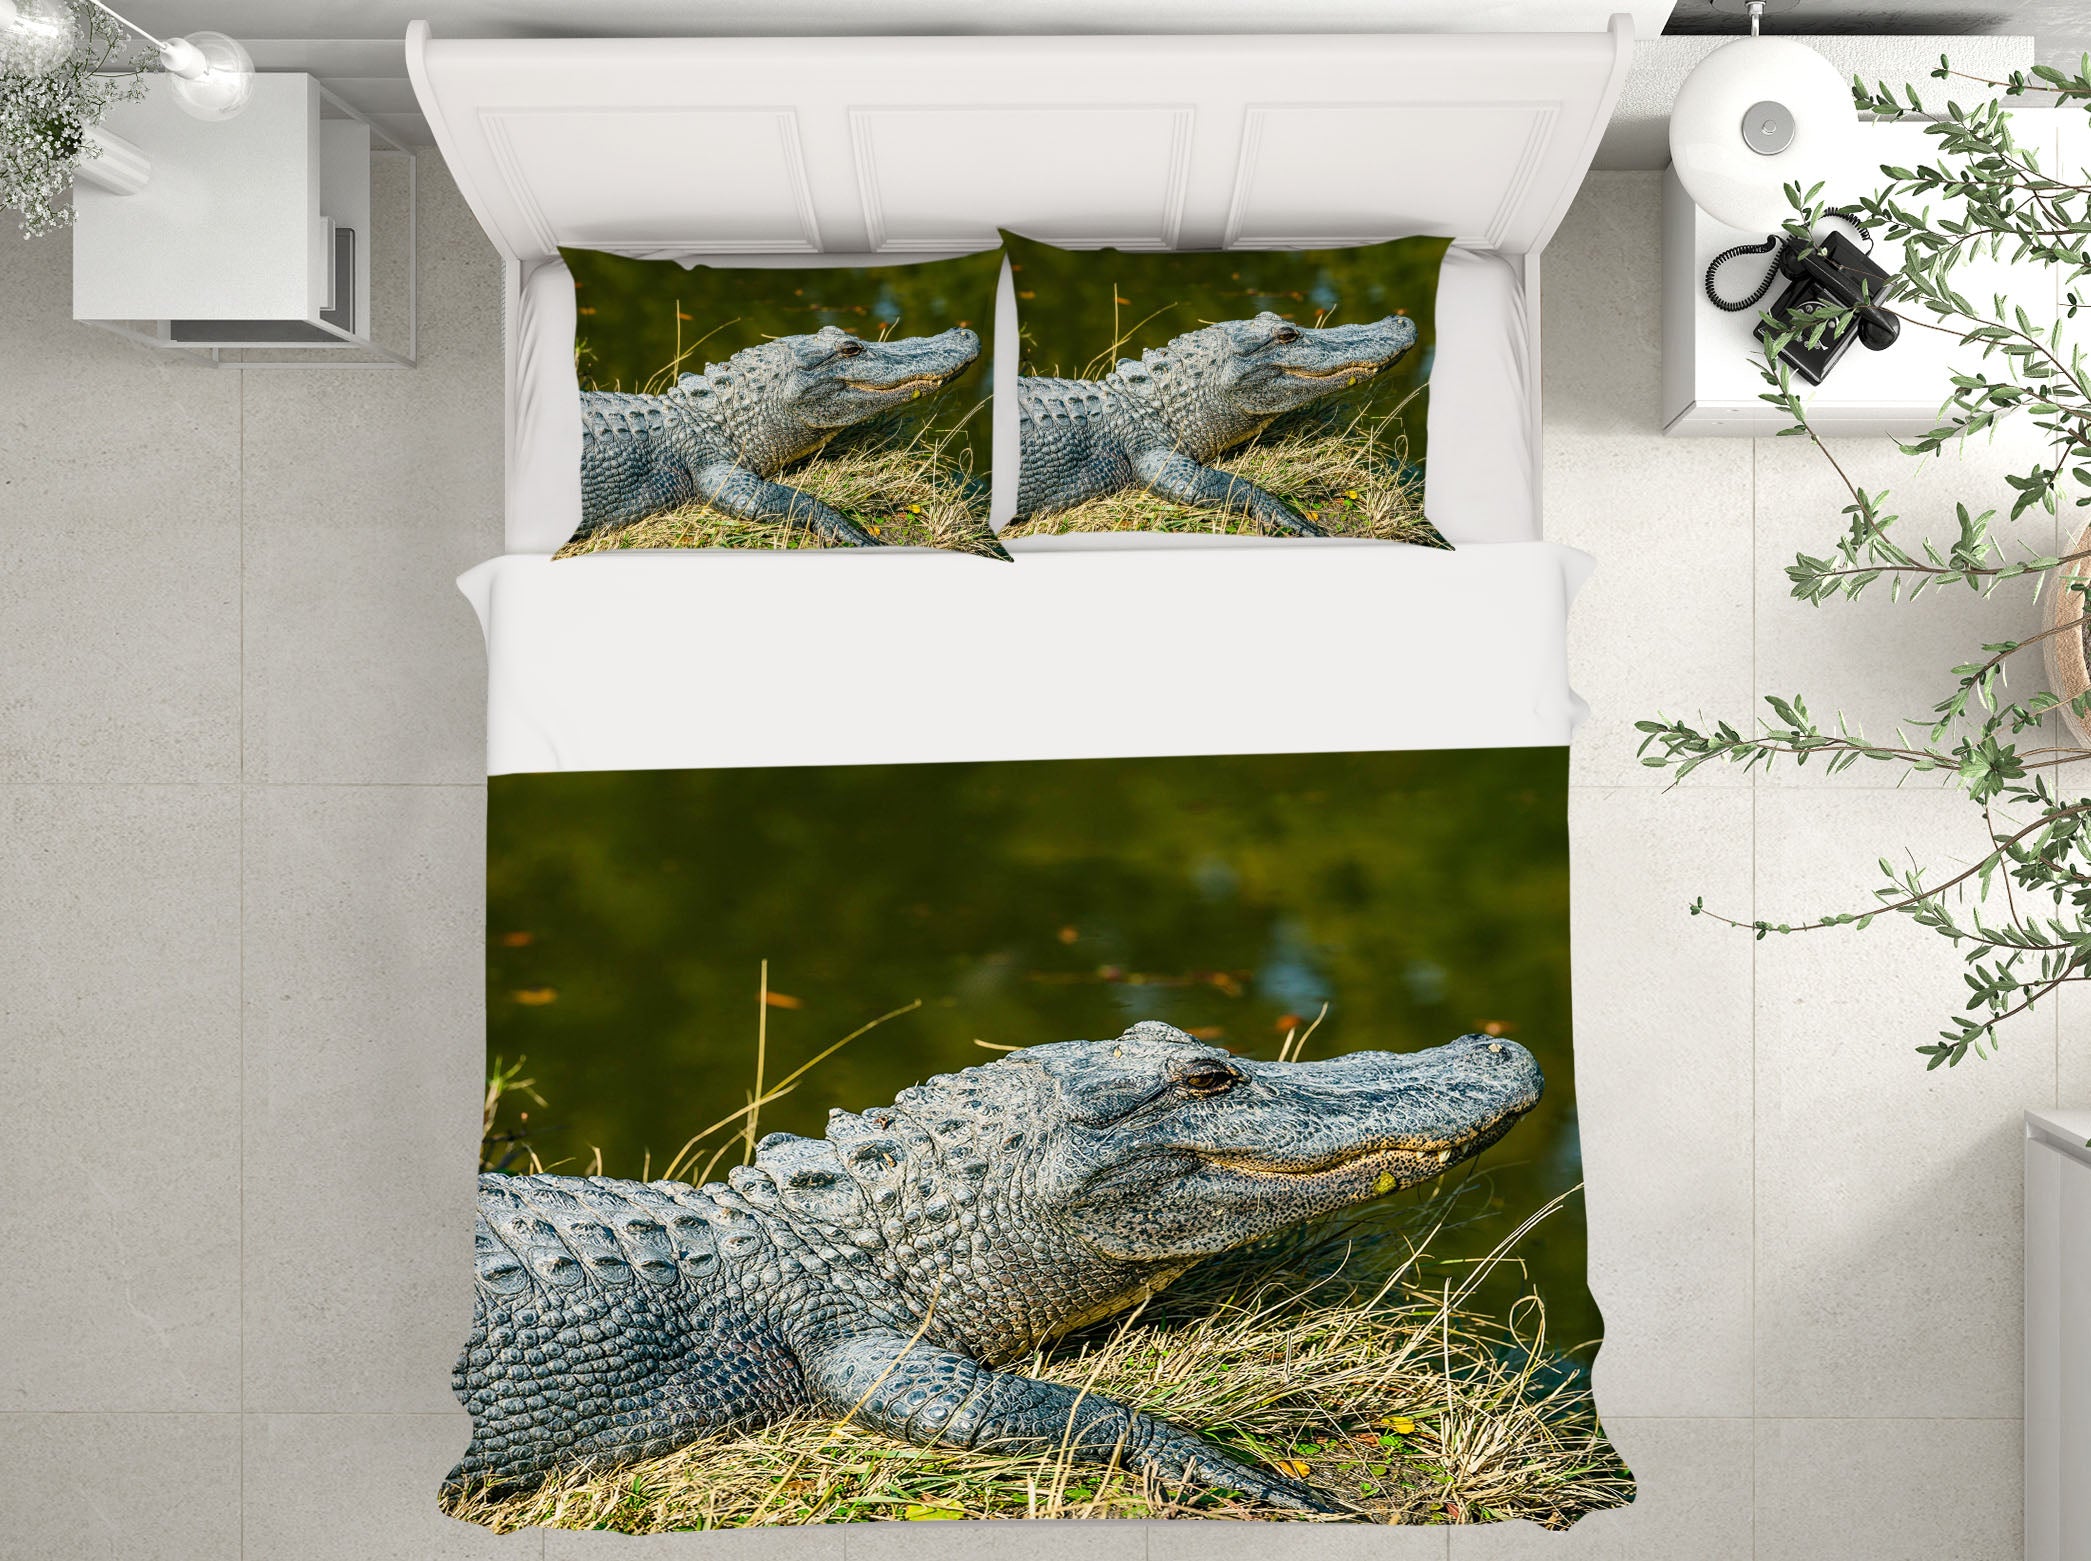 3D Crocodile 21041 Bed Pillowcases Quilt